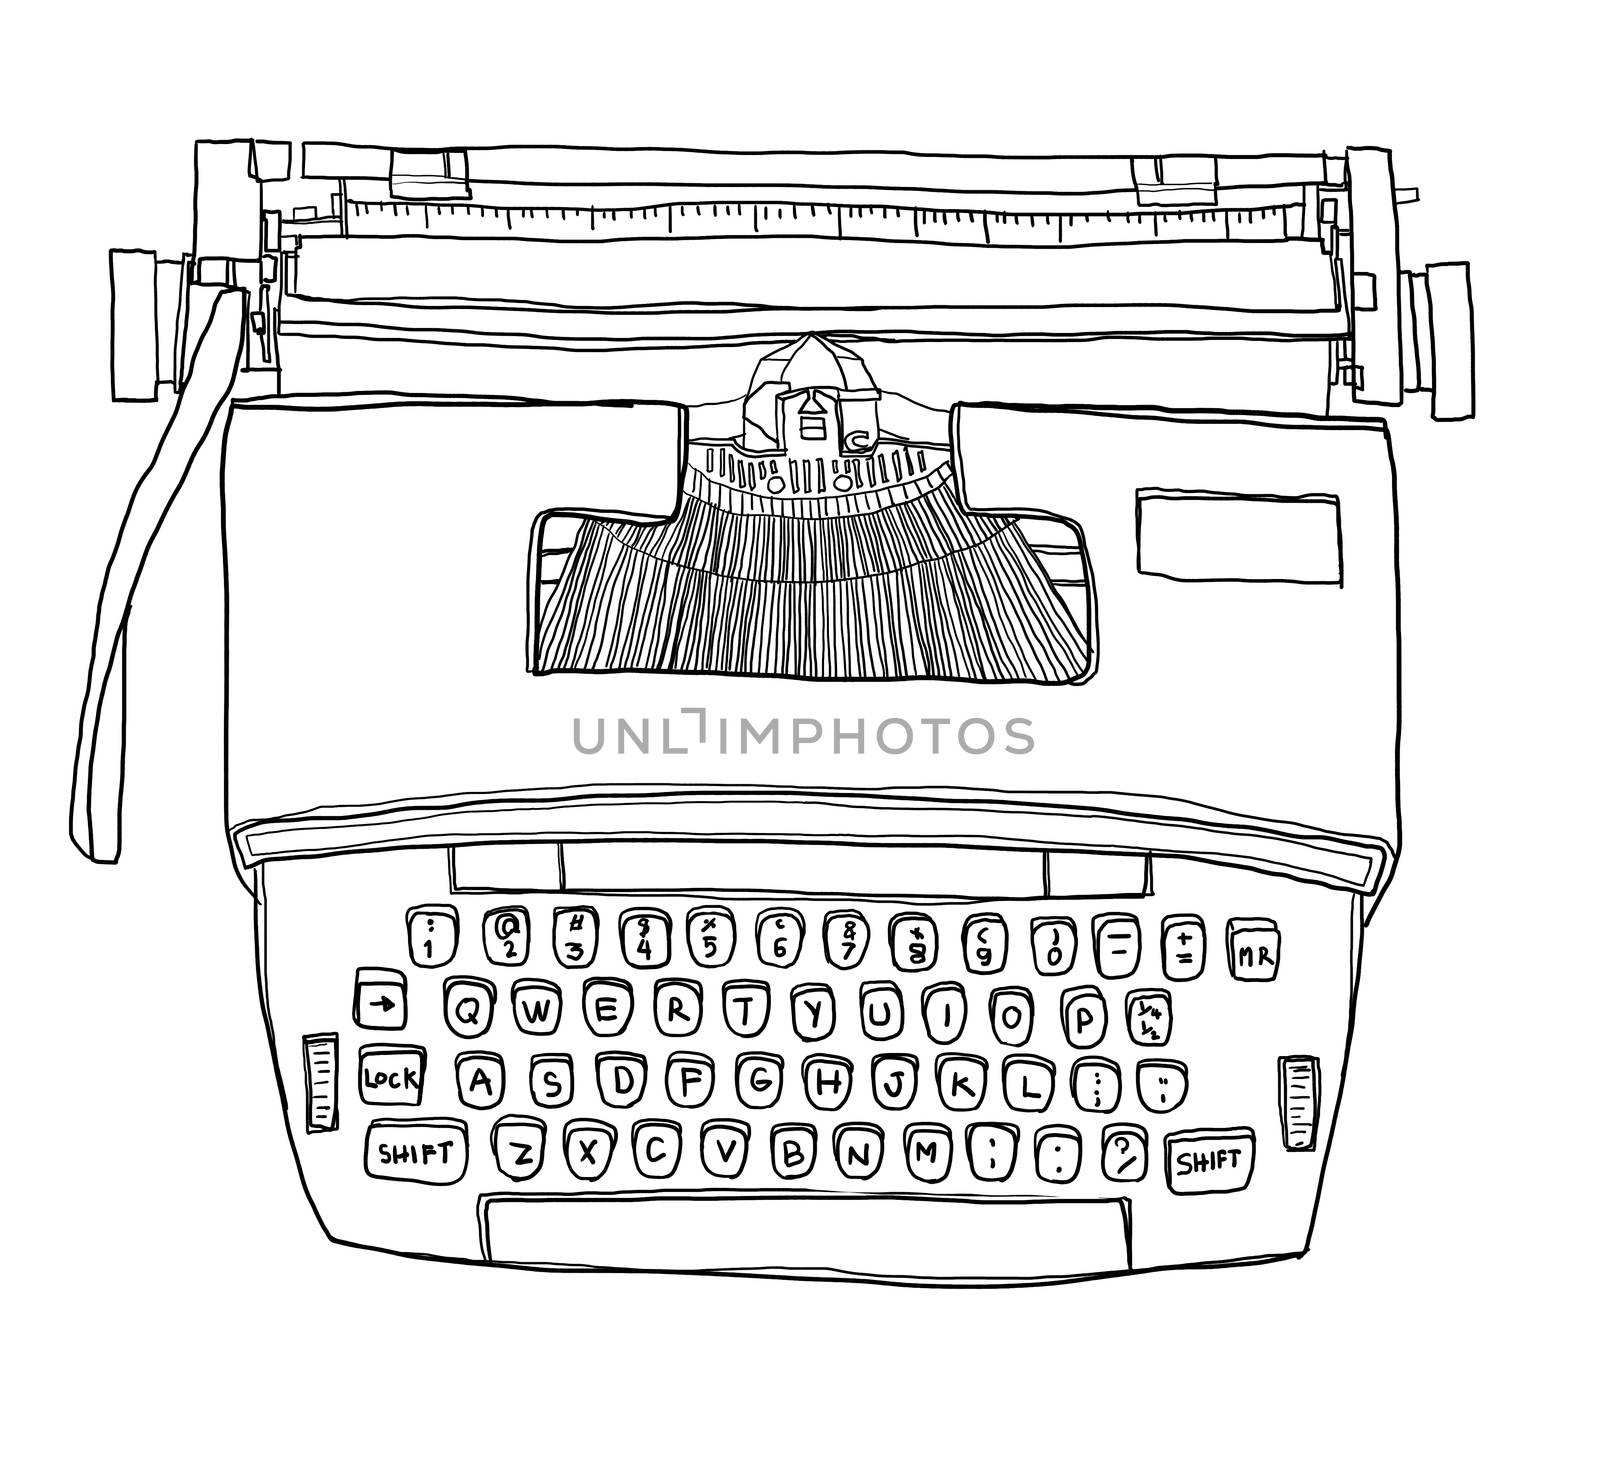 Typewriter Vintage Electric cute line art illustration